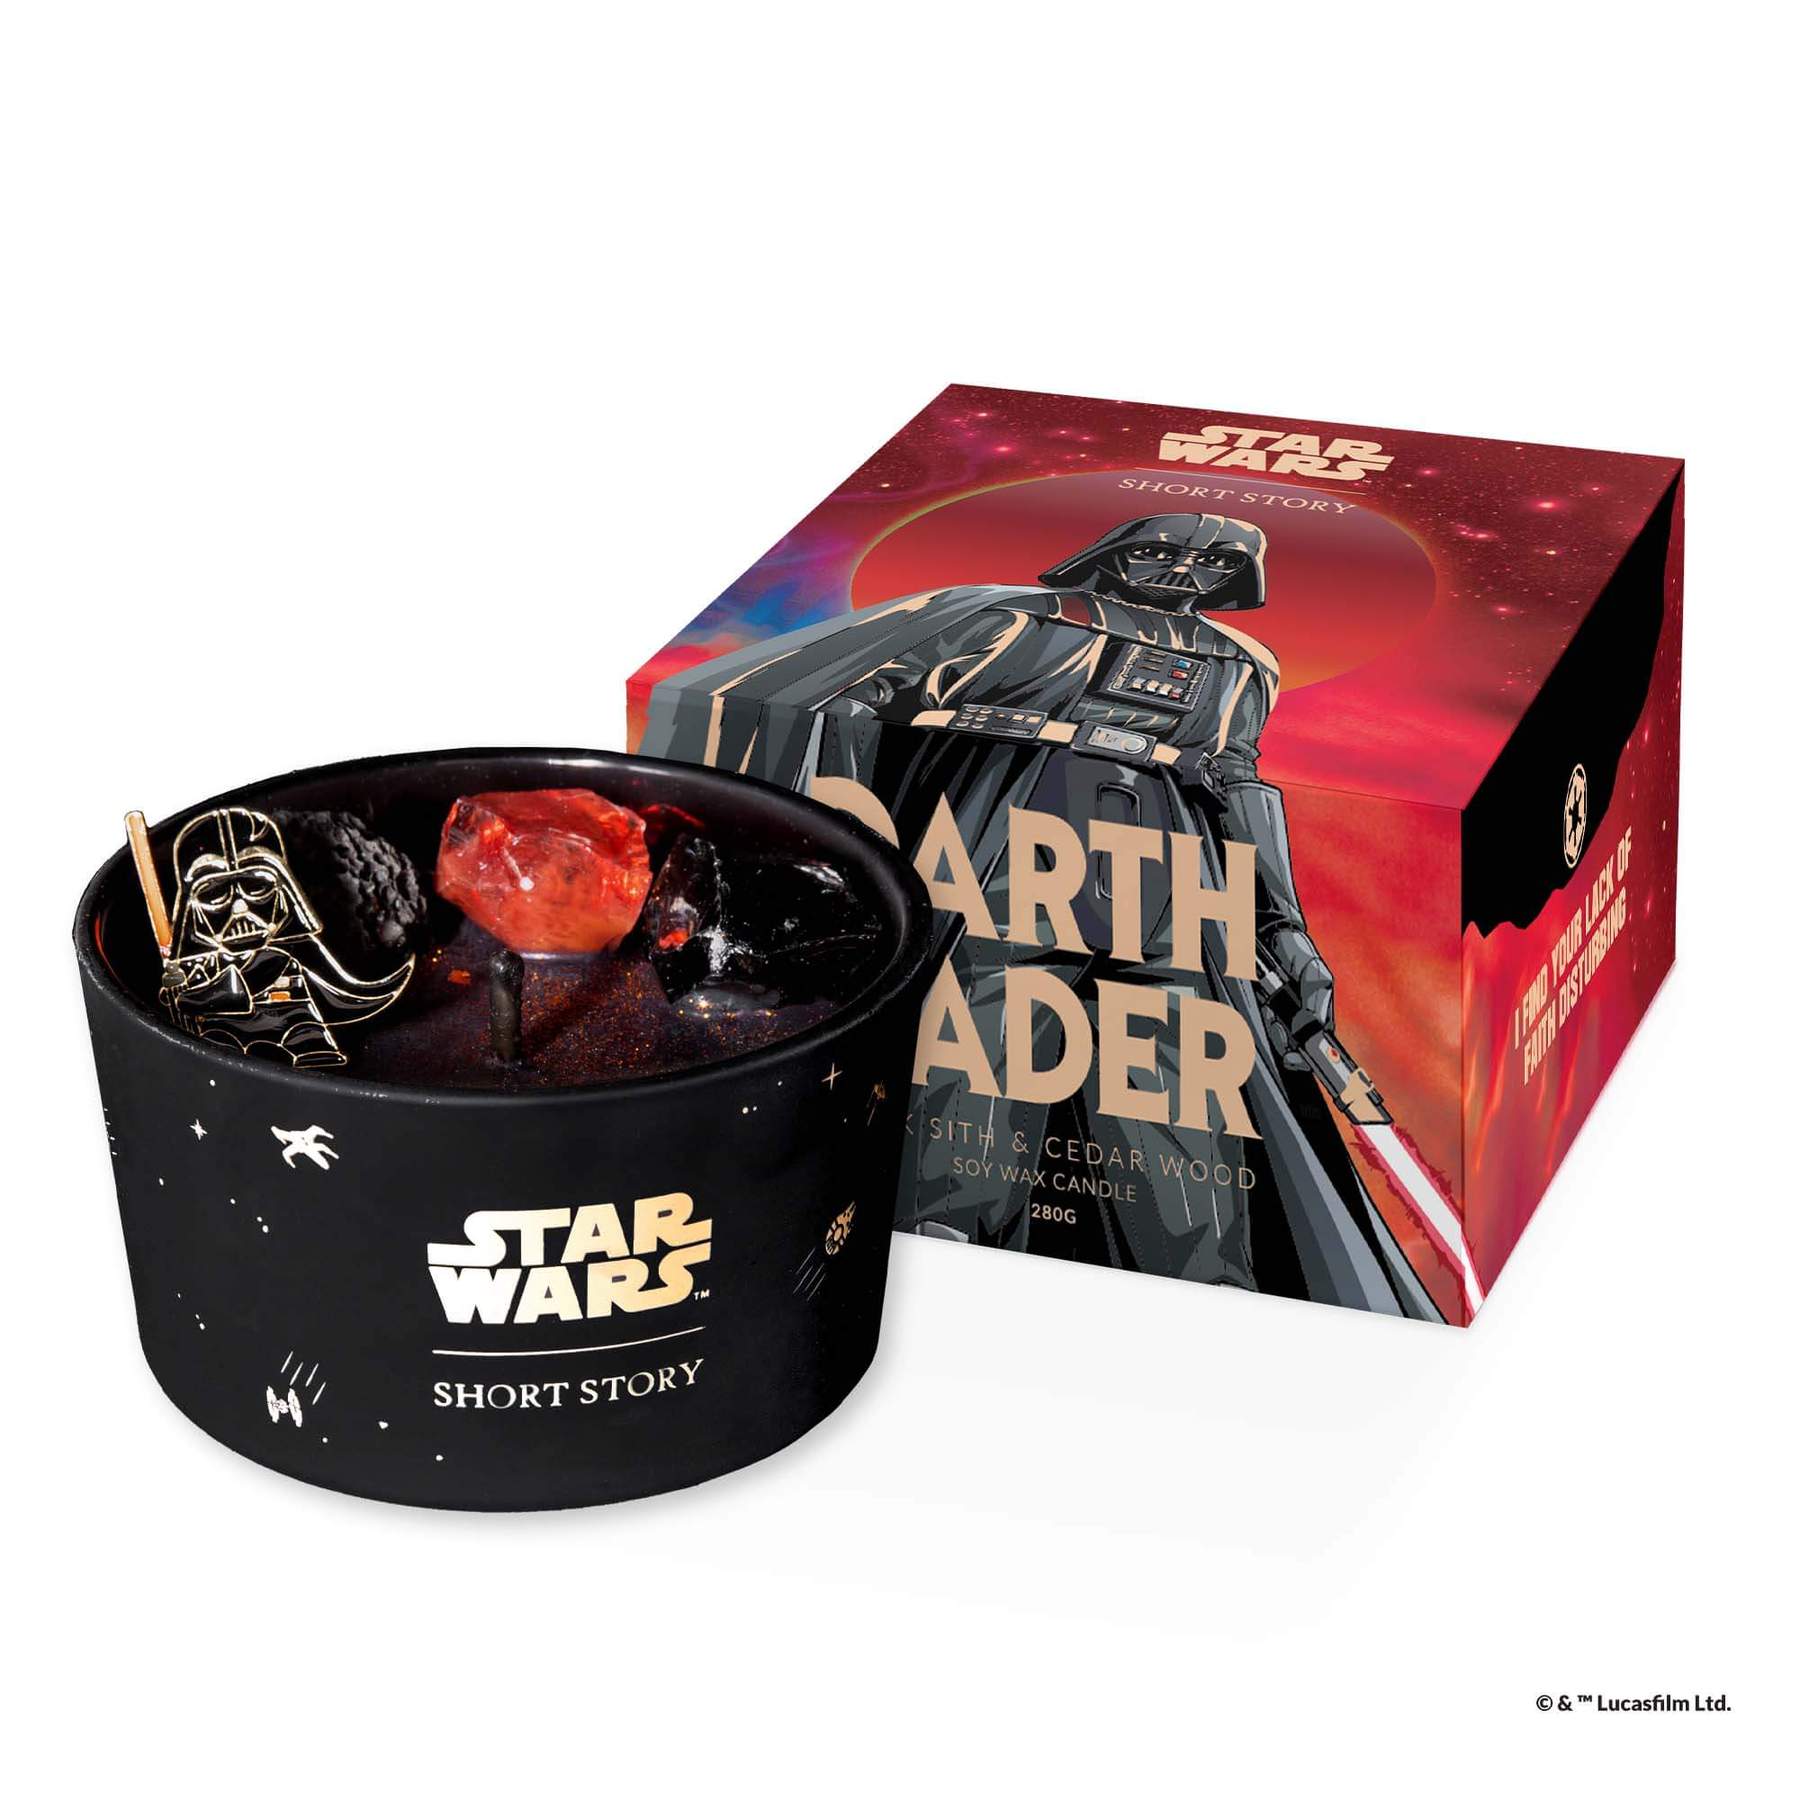 Star Wars ™ Candle Darth Vader™ - DARK SITH™ & CEDAR WOOD